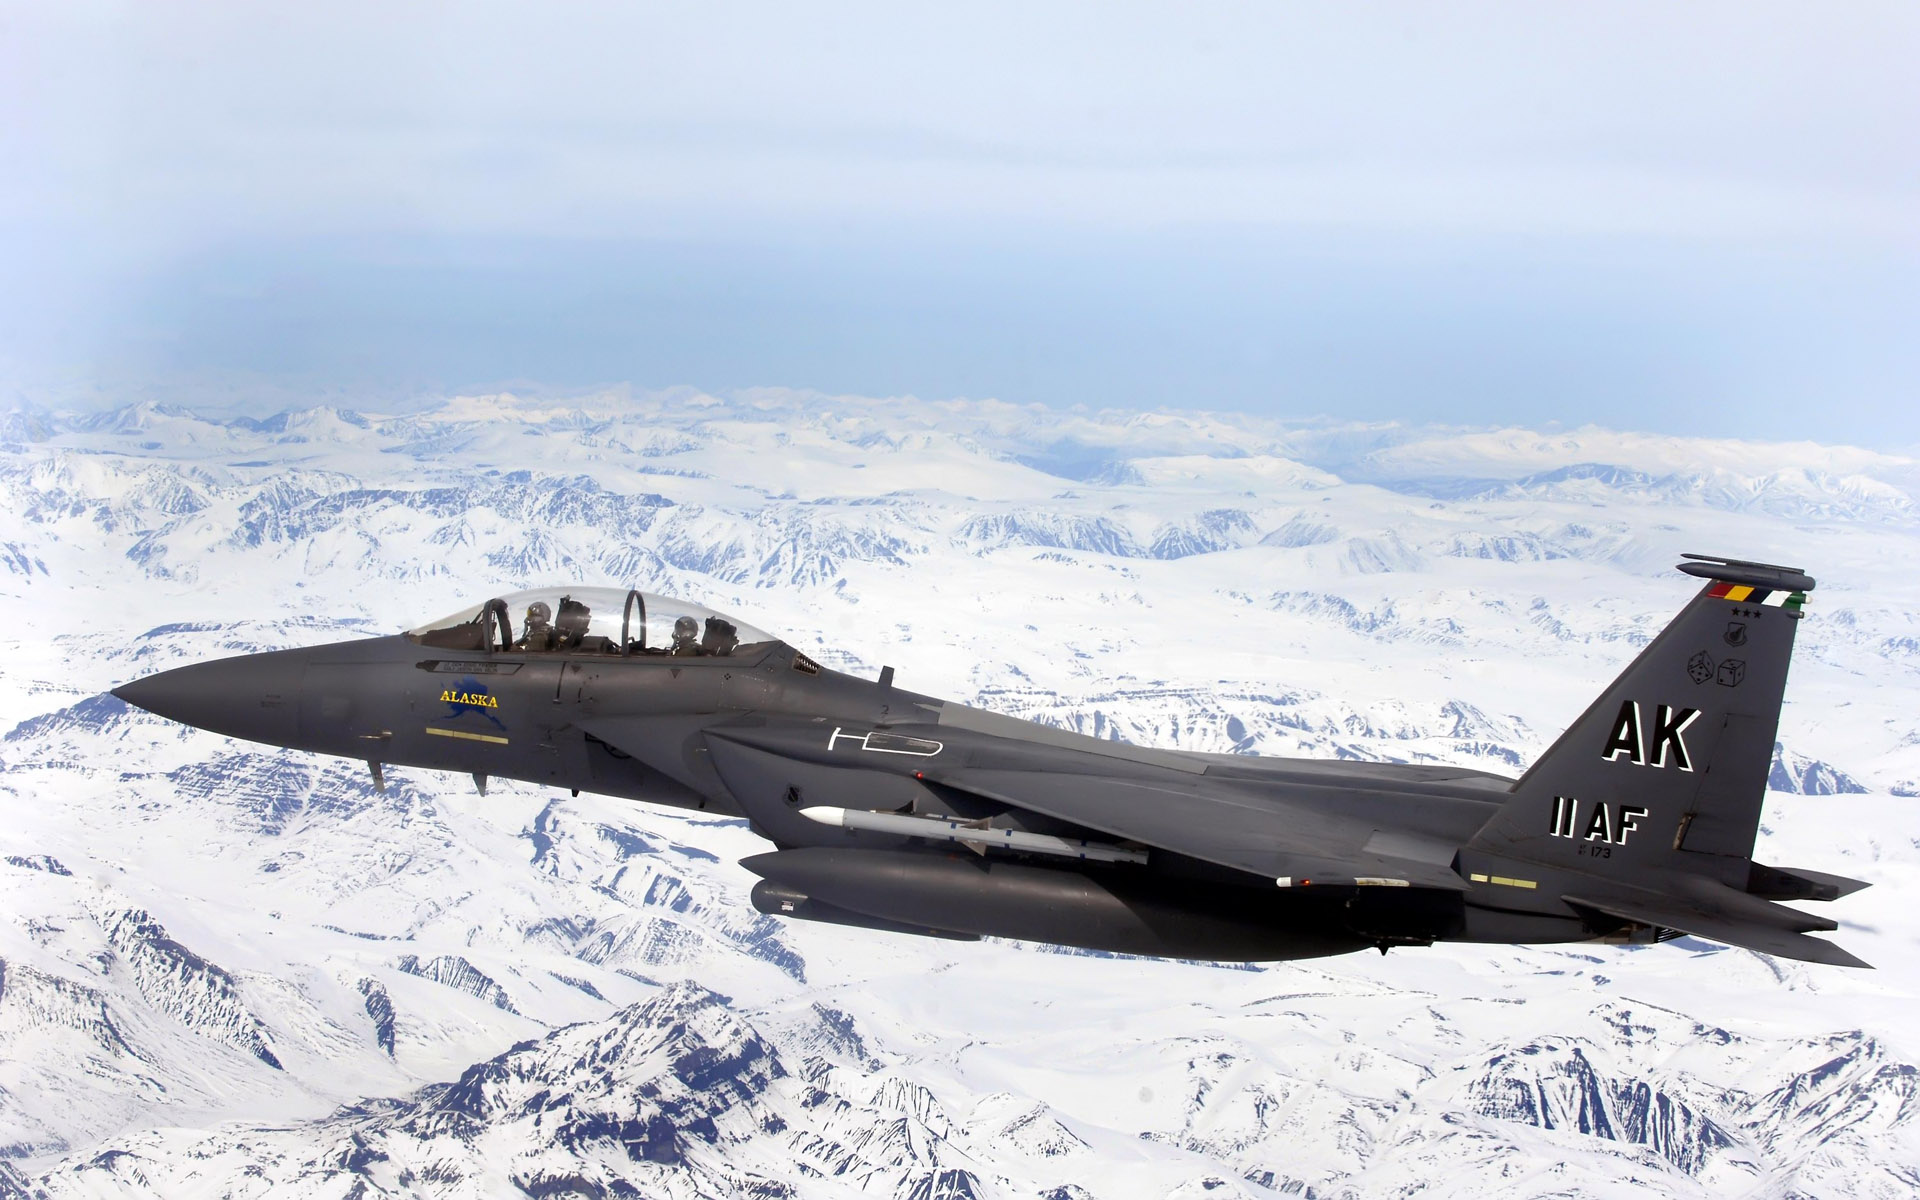 F 15E Strike Eagle flys over Glacial fields1532110489 - F 15E Strike Eagle flys over Glacial fields - Strike, Over, Glacial, flys, fields, Eagle, Carrier